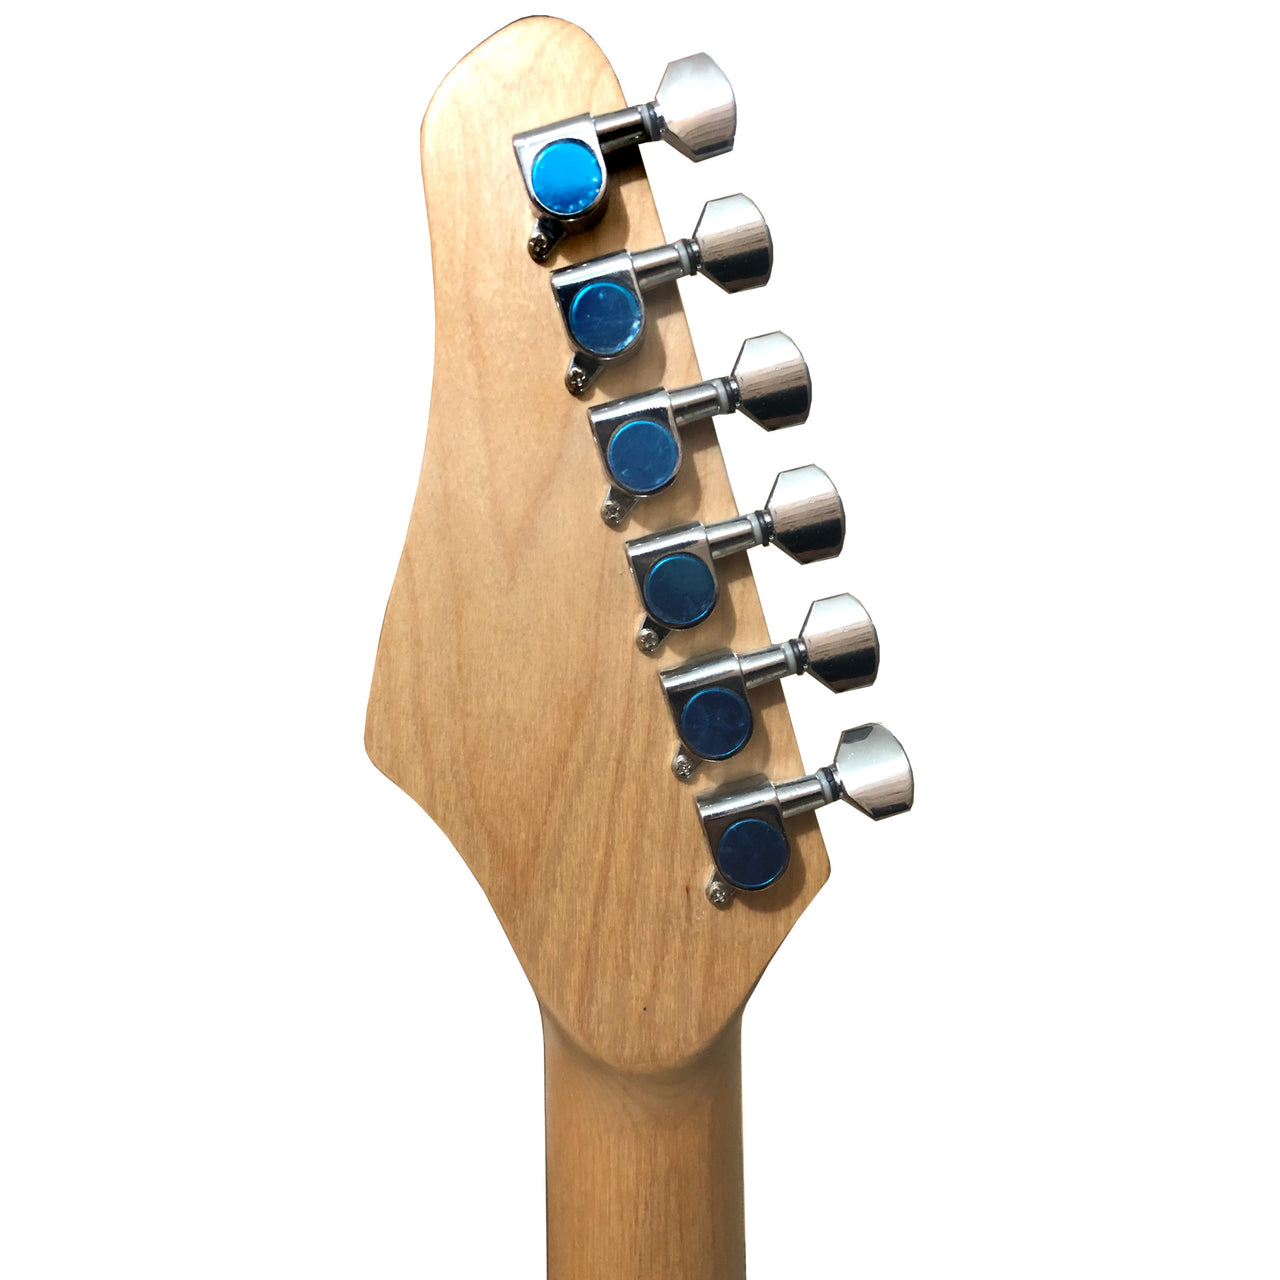 Guitarra Electrica Danwood Egs216twr Stratocaster